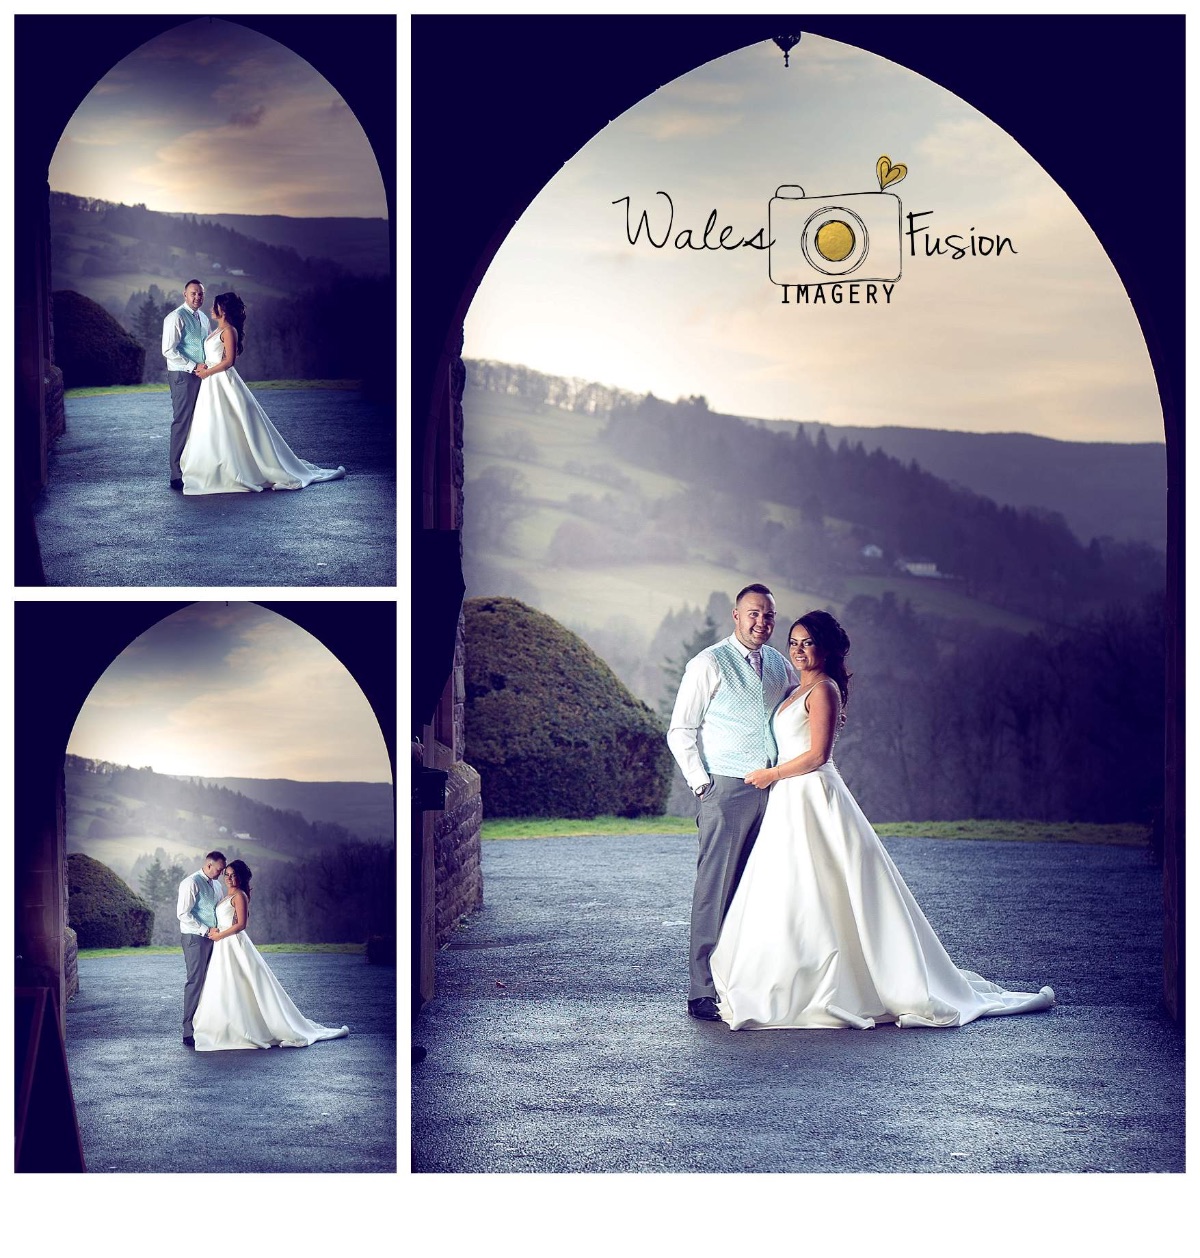 Combo photo/Video. Wedding Fusion Imagery.-Image-102